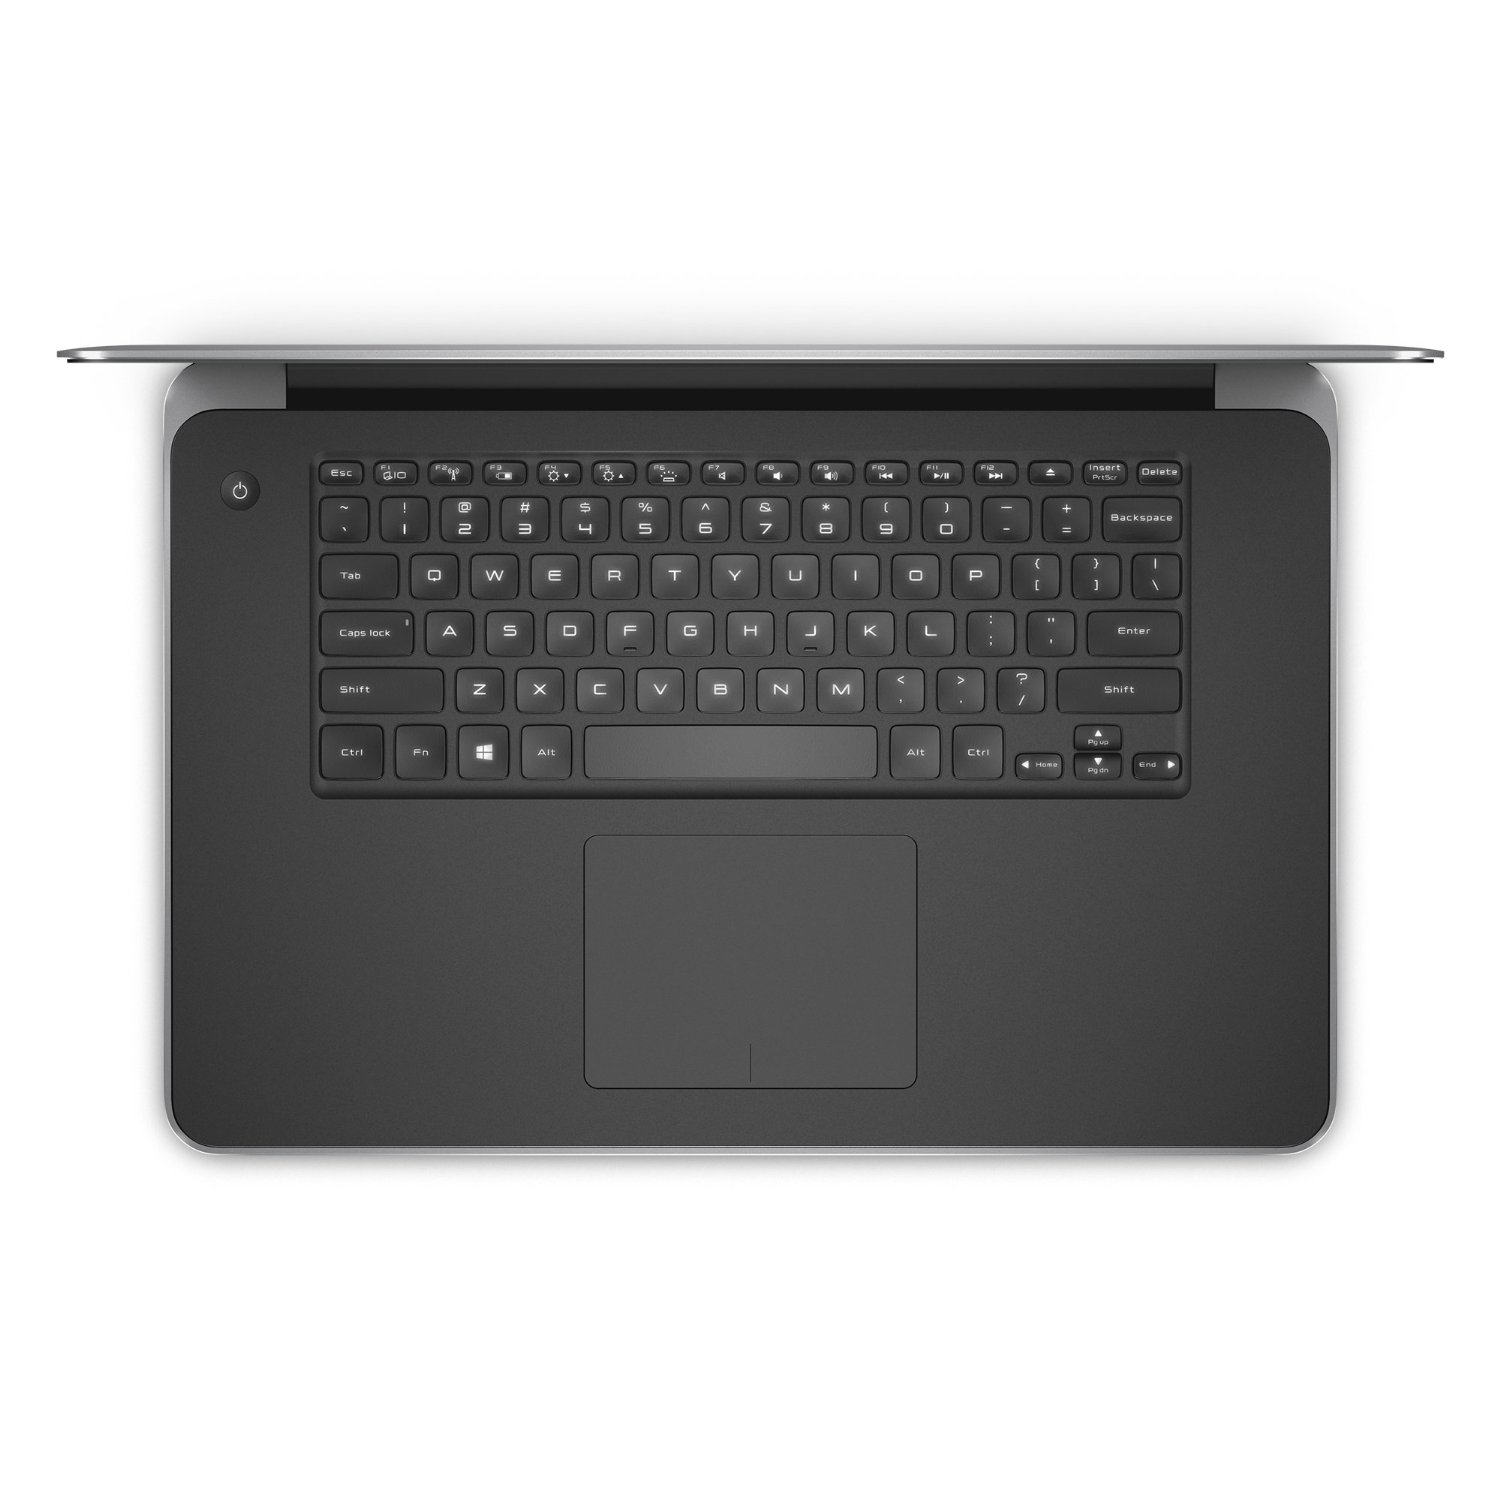 Dell XPS 15 9550-4444SLV Signature Edition Laptop